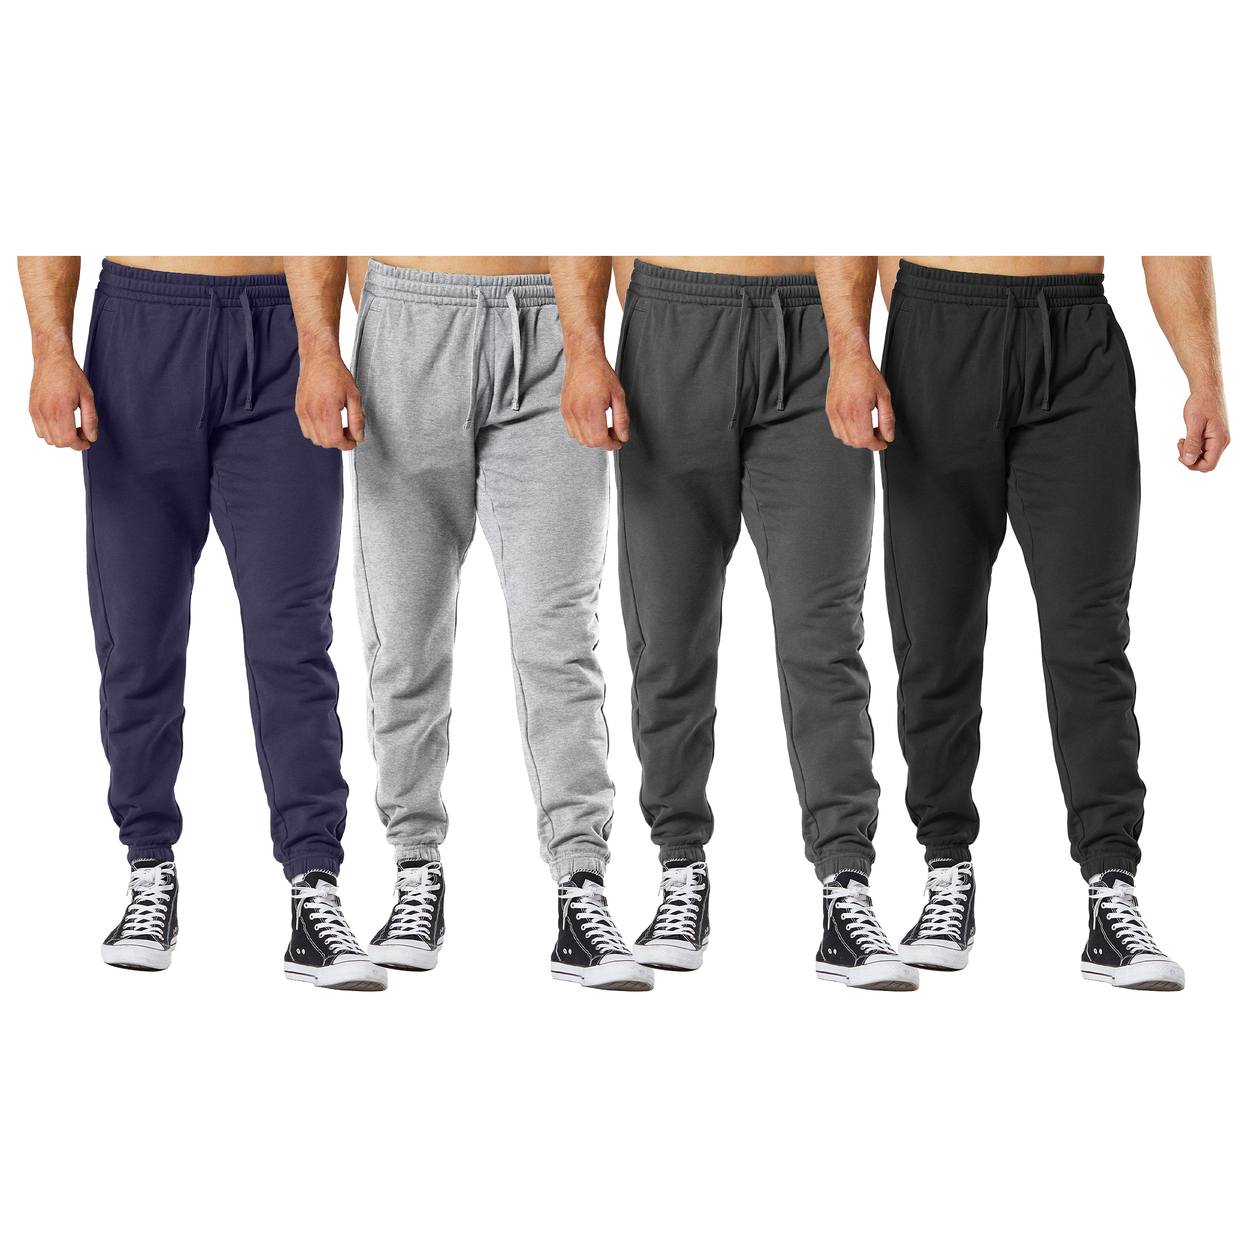 Men's Ultra-Soft Cozy Winter Warm Casual Fleece Lined Sweatpants Jogger - Navy, Xx-large